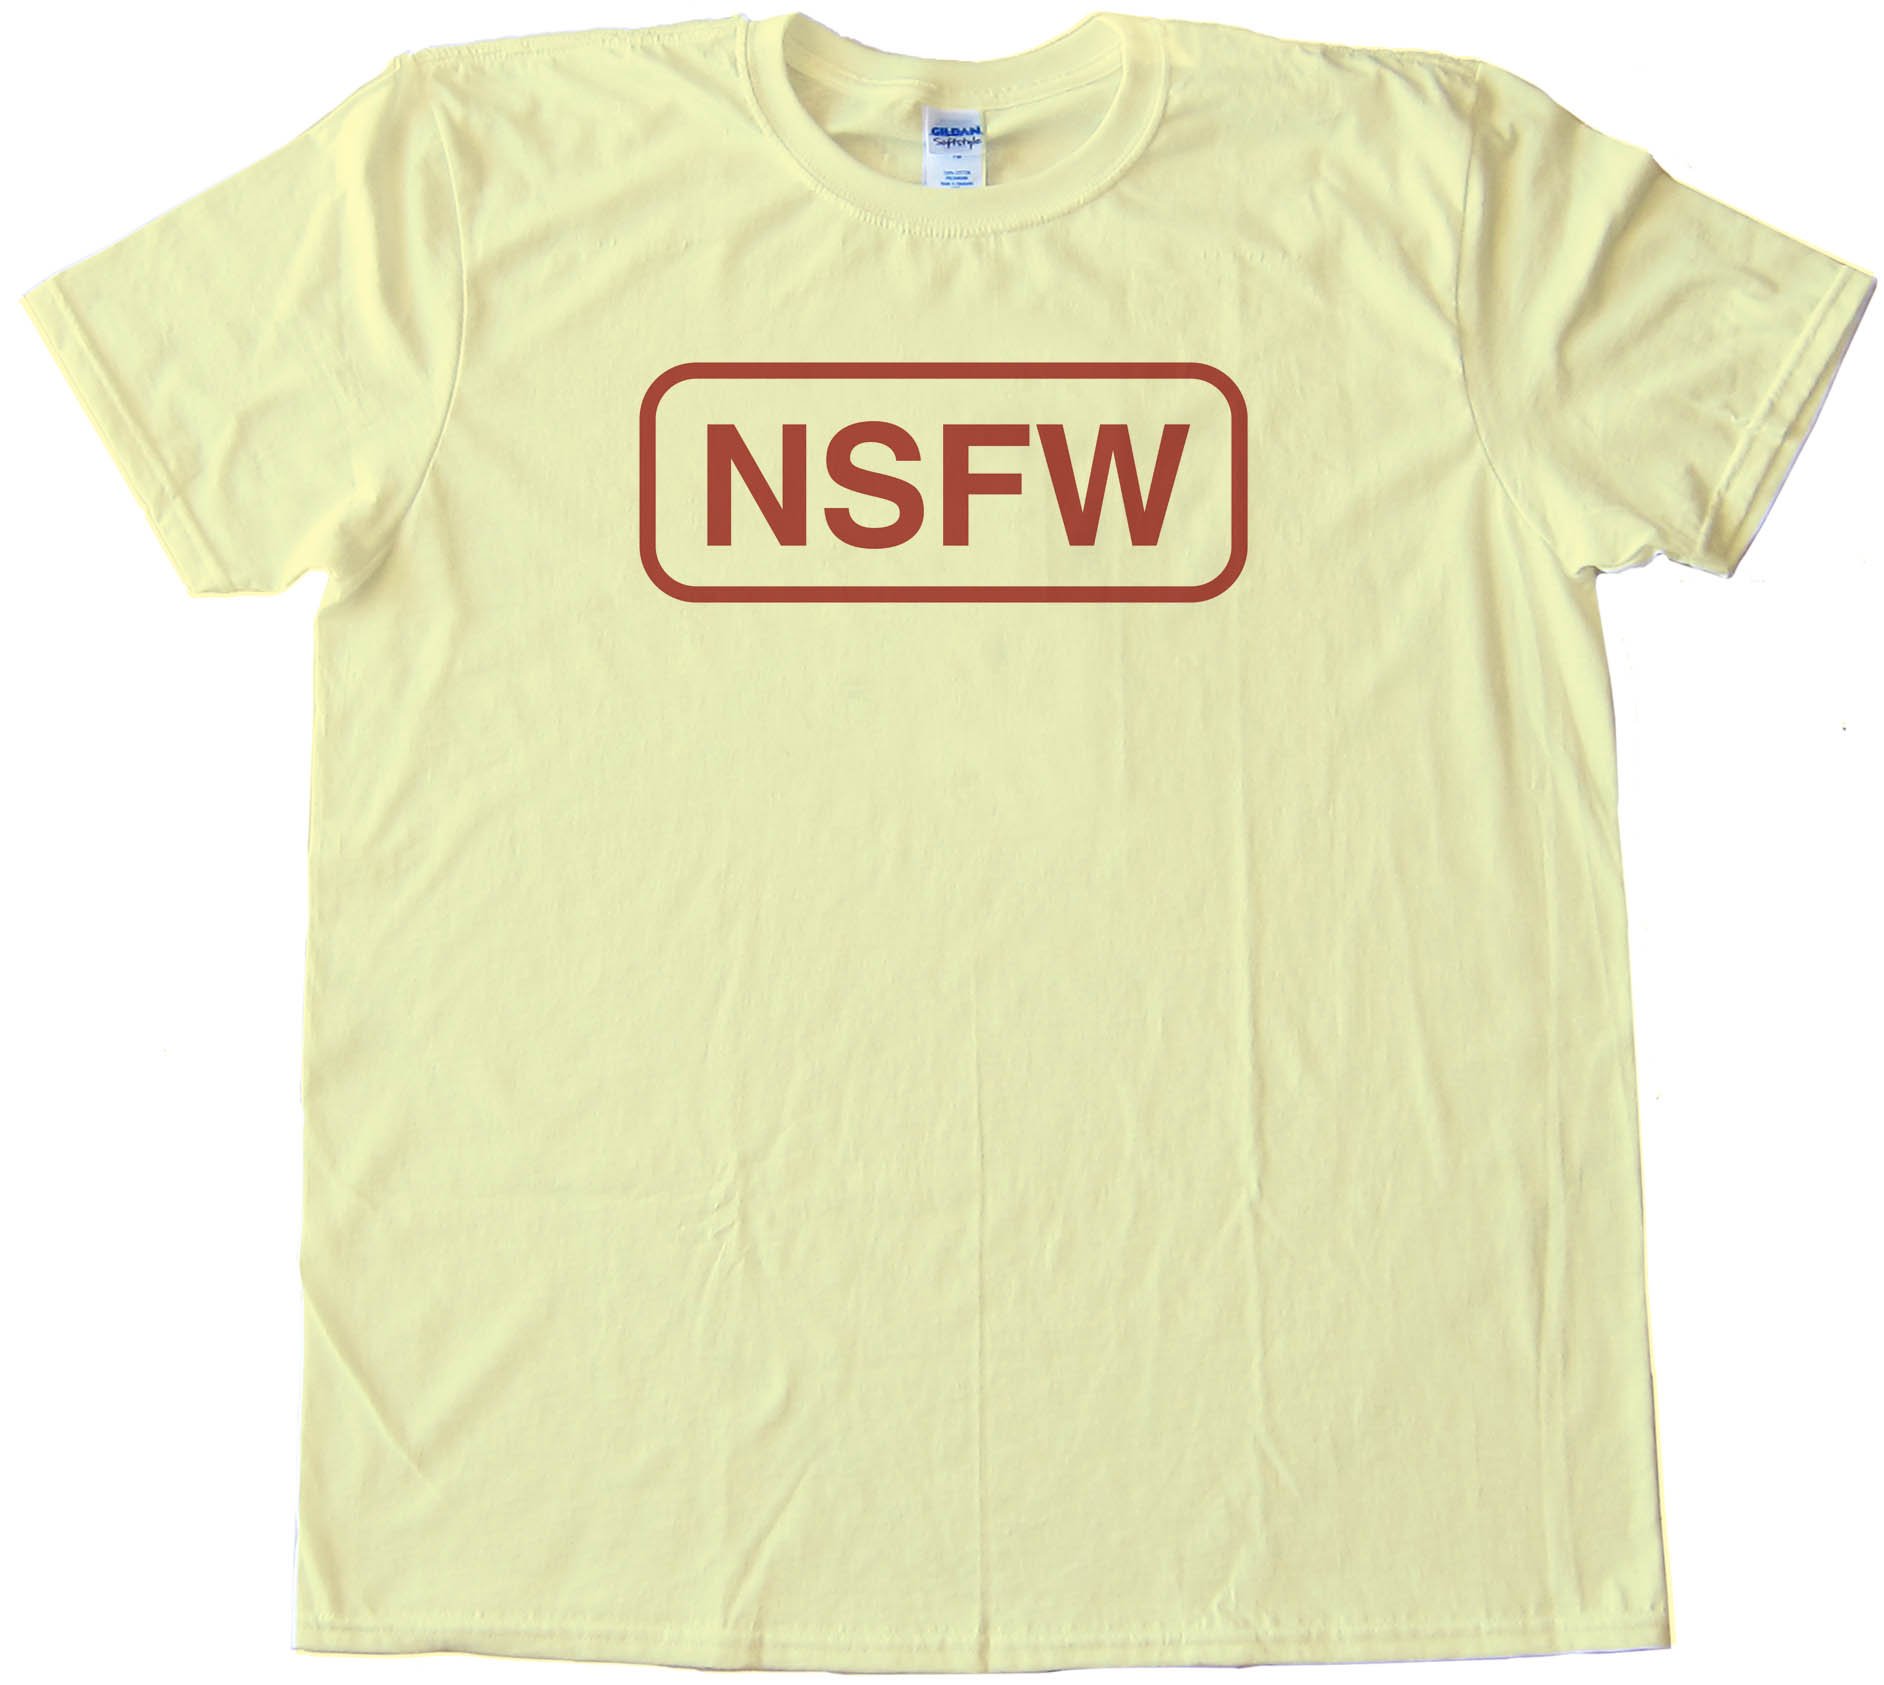 Nsfw Not Safe For Work - Tee Shirt